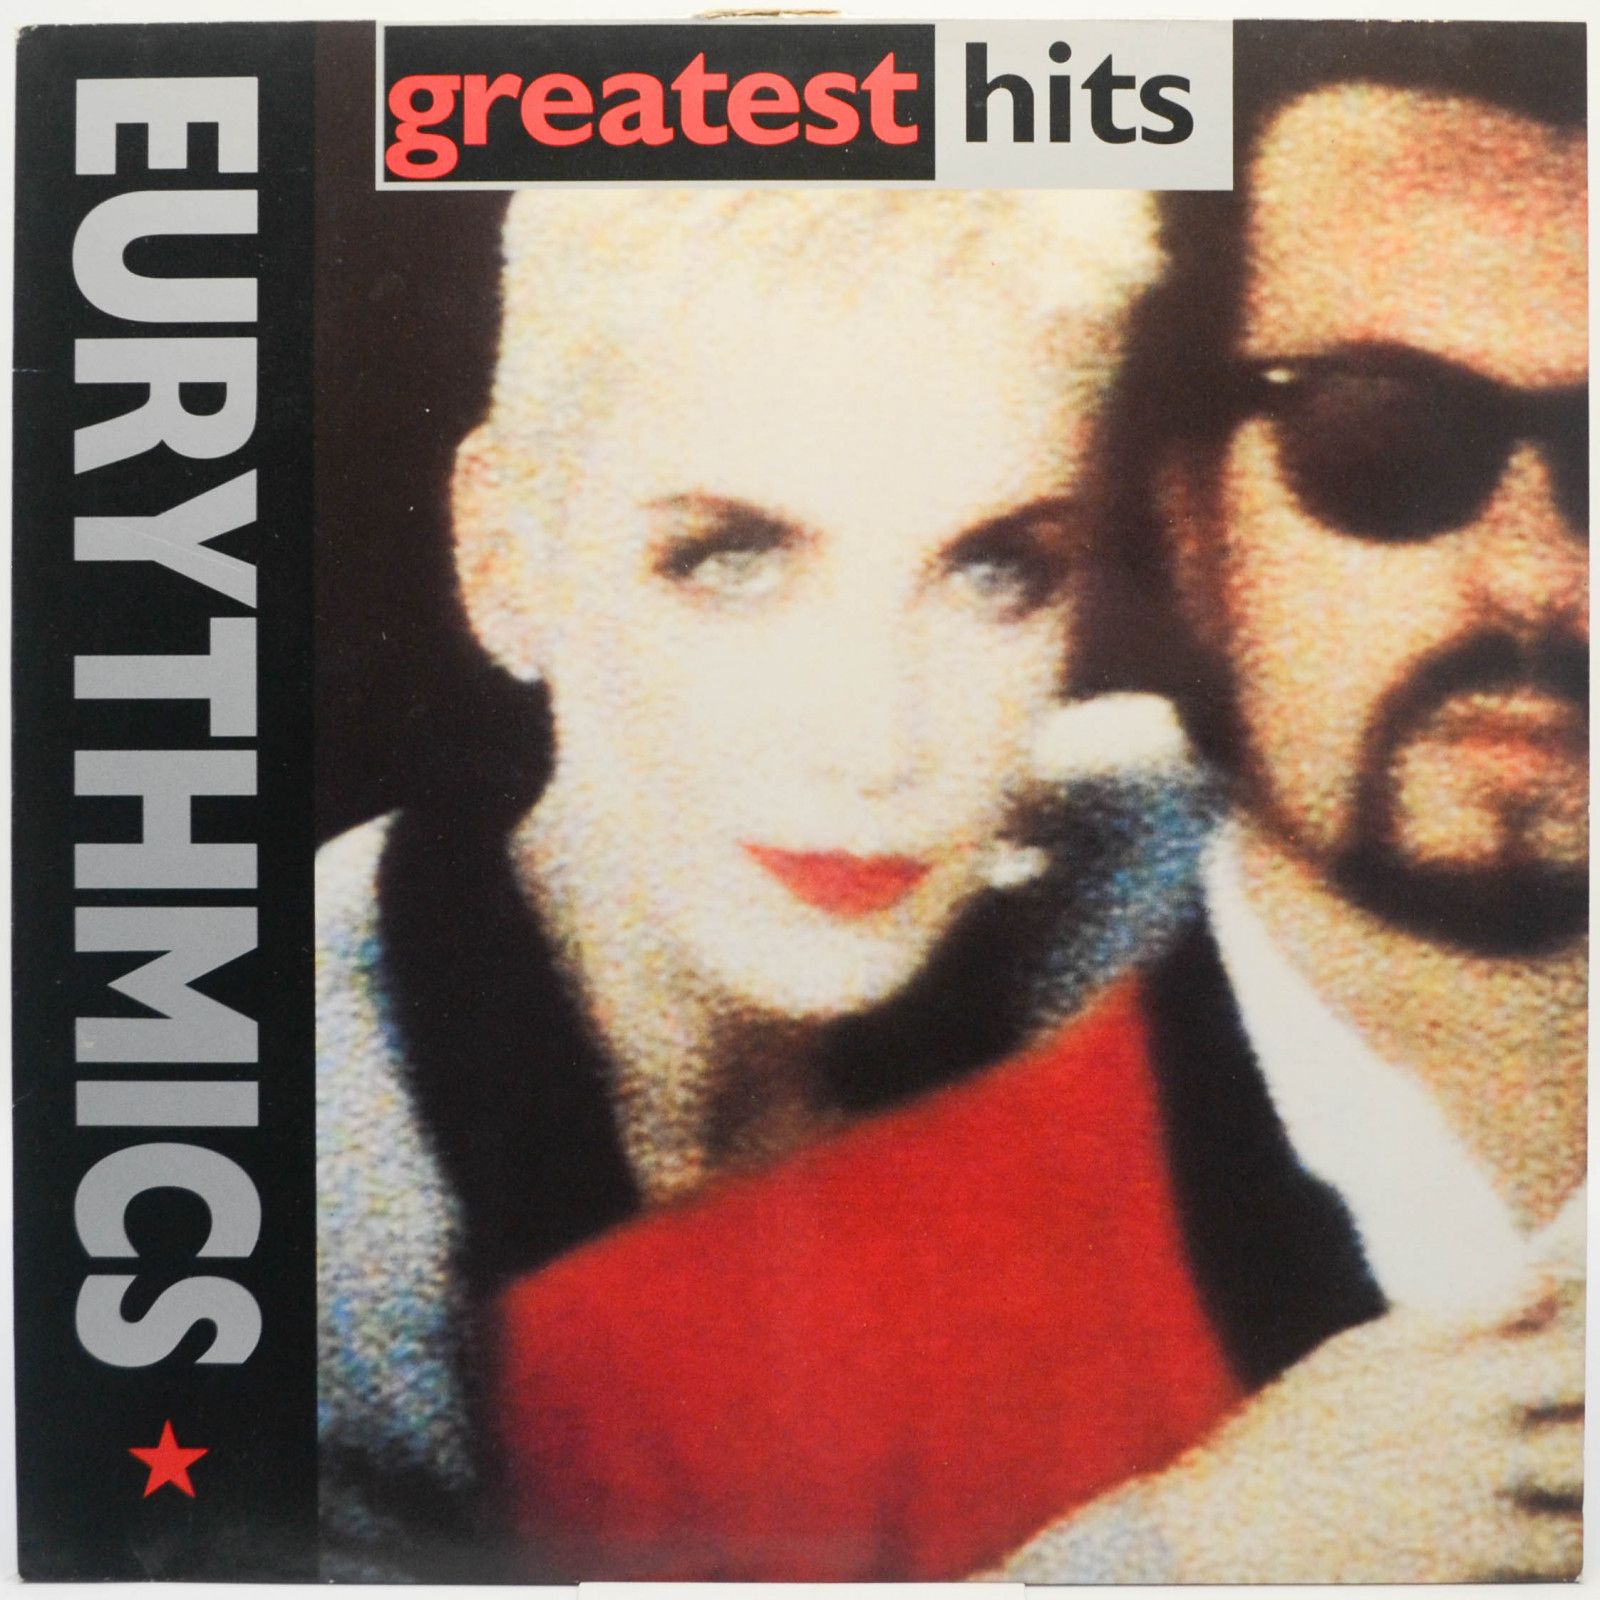 Eurythmics — Greatest Hits, 1991